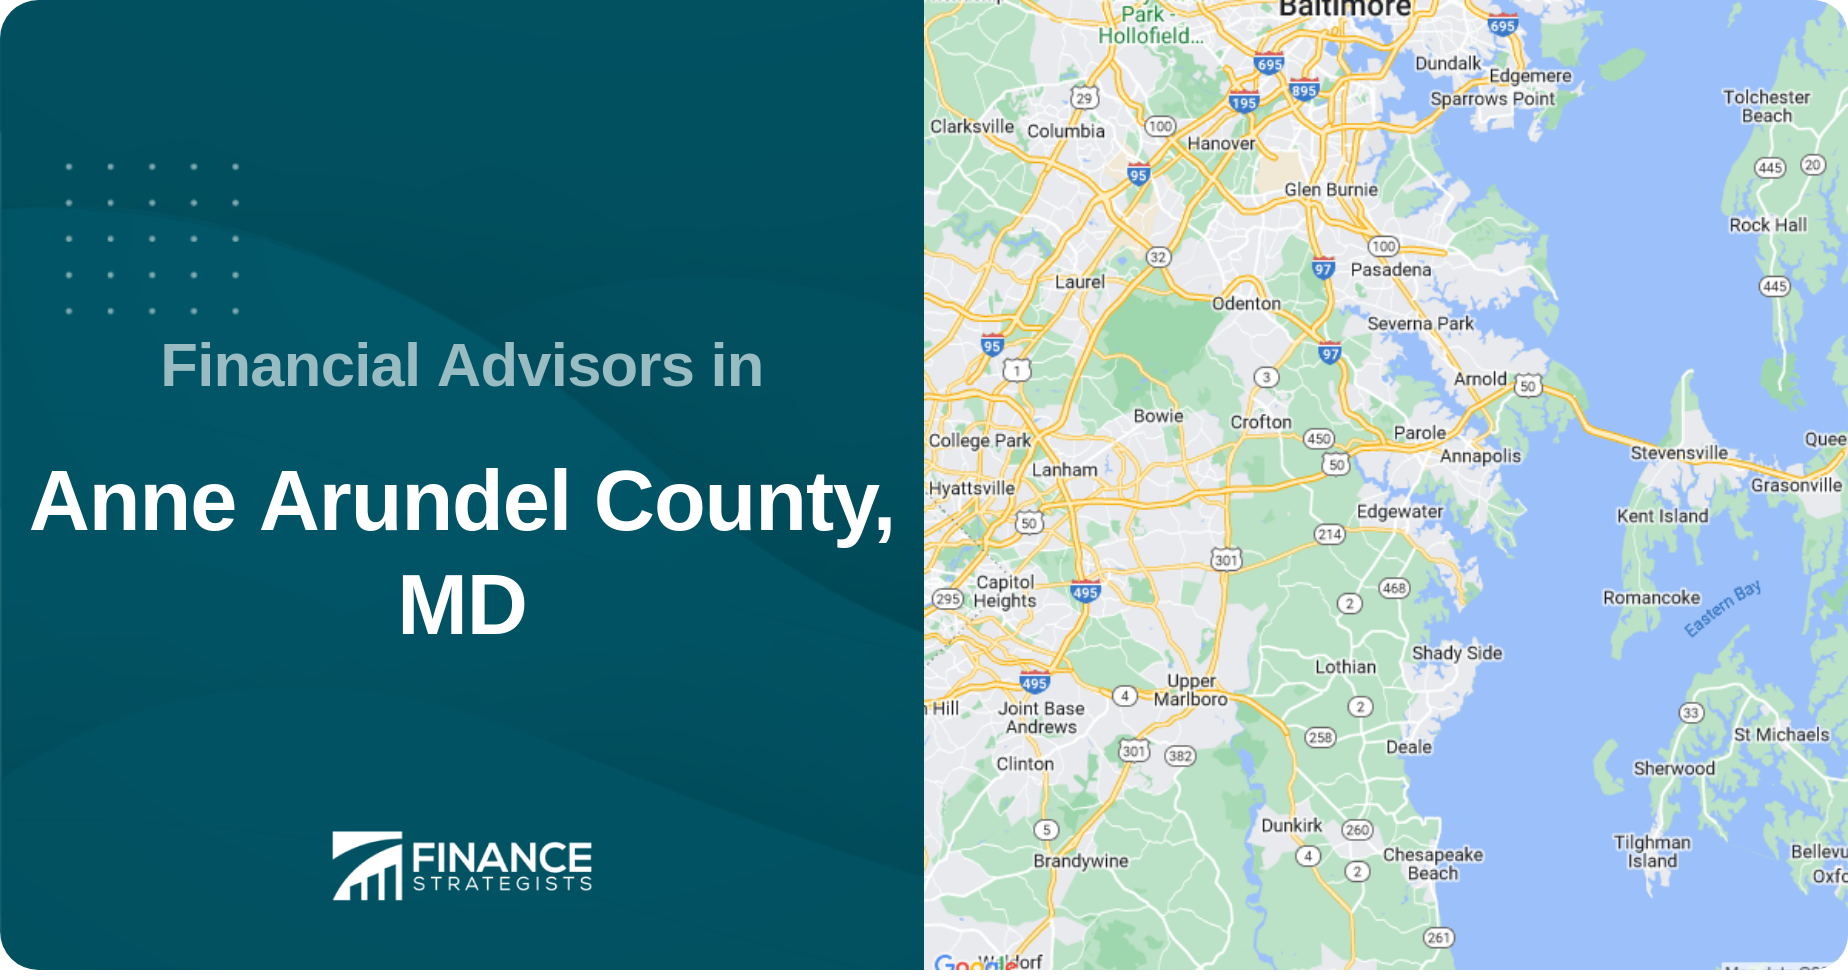 Financial Advisors in Anne Arundel County, MD